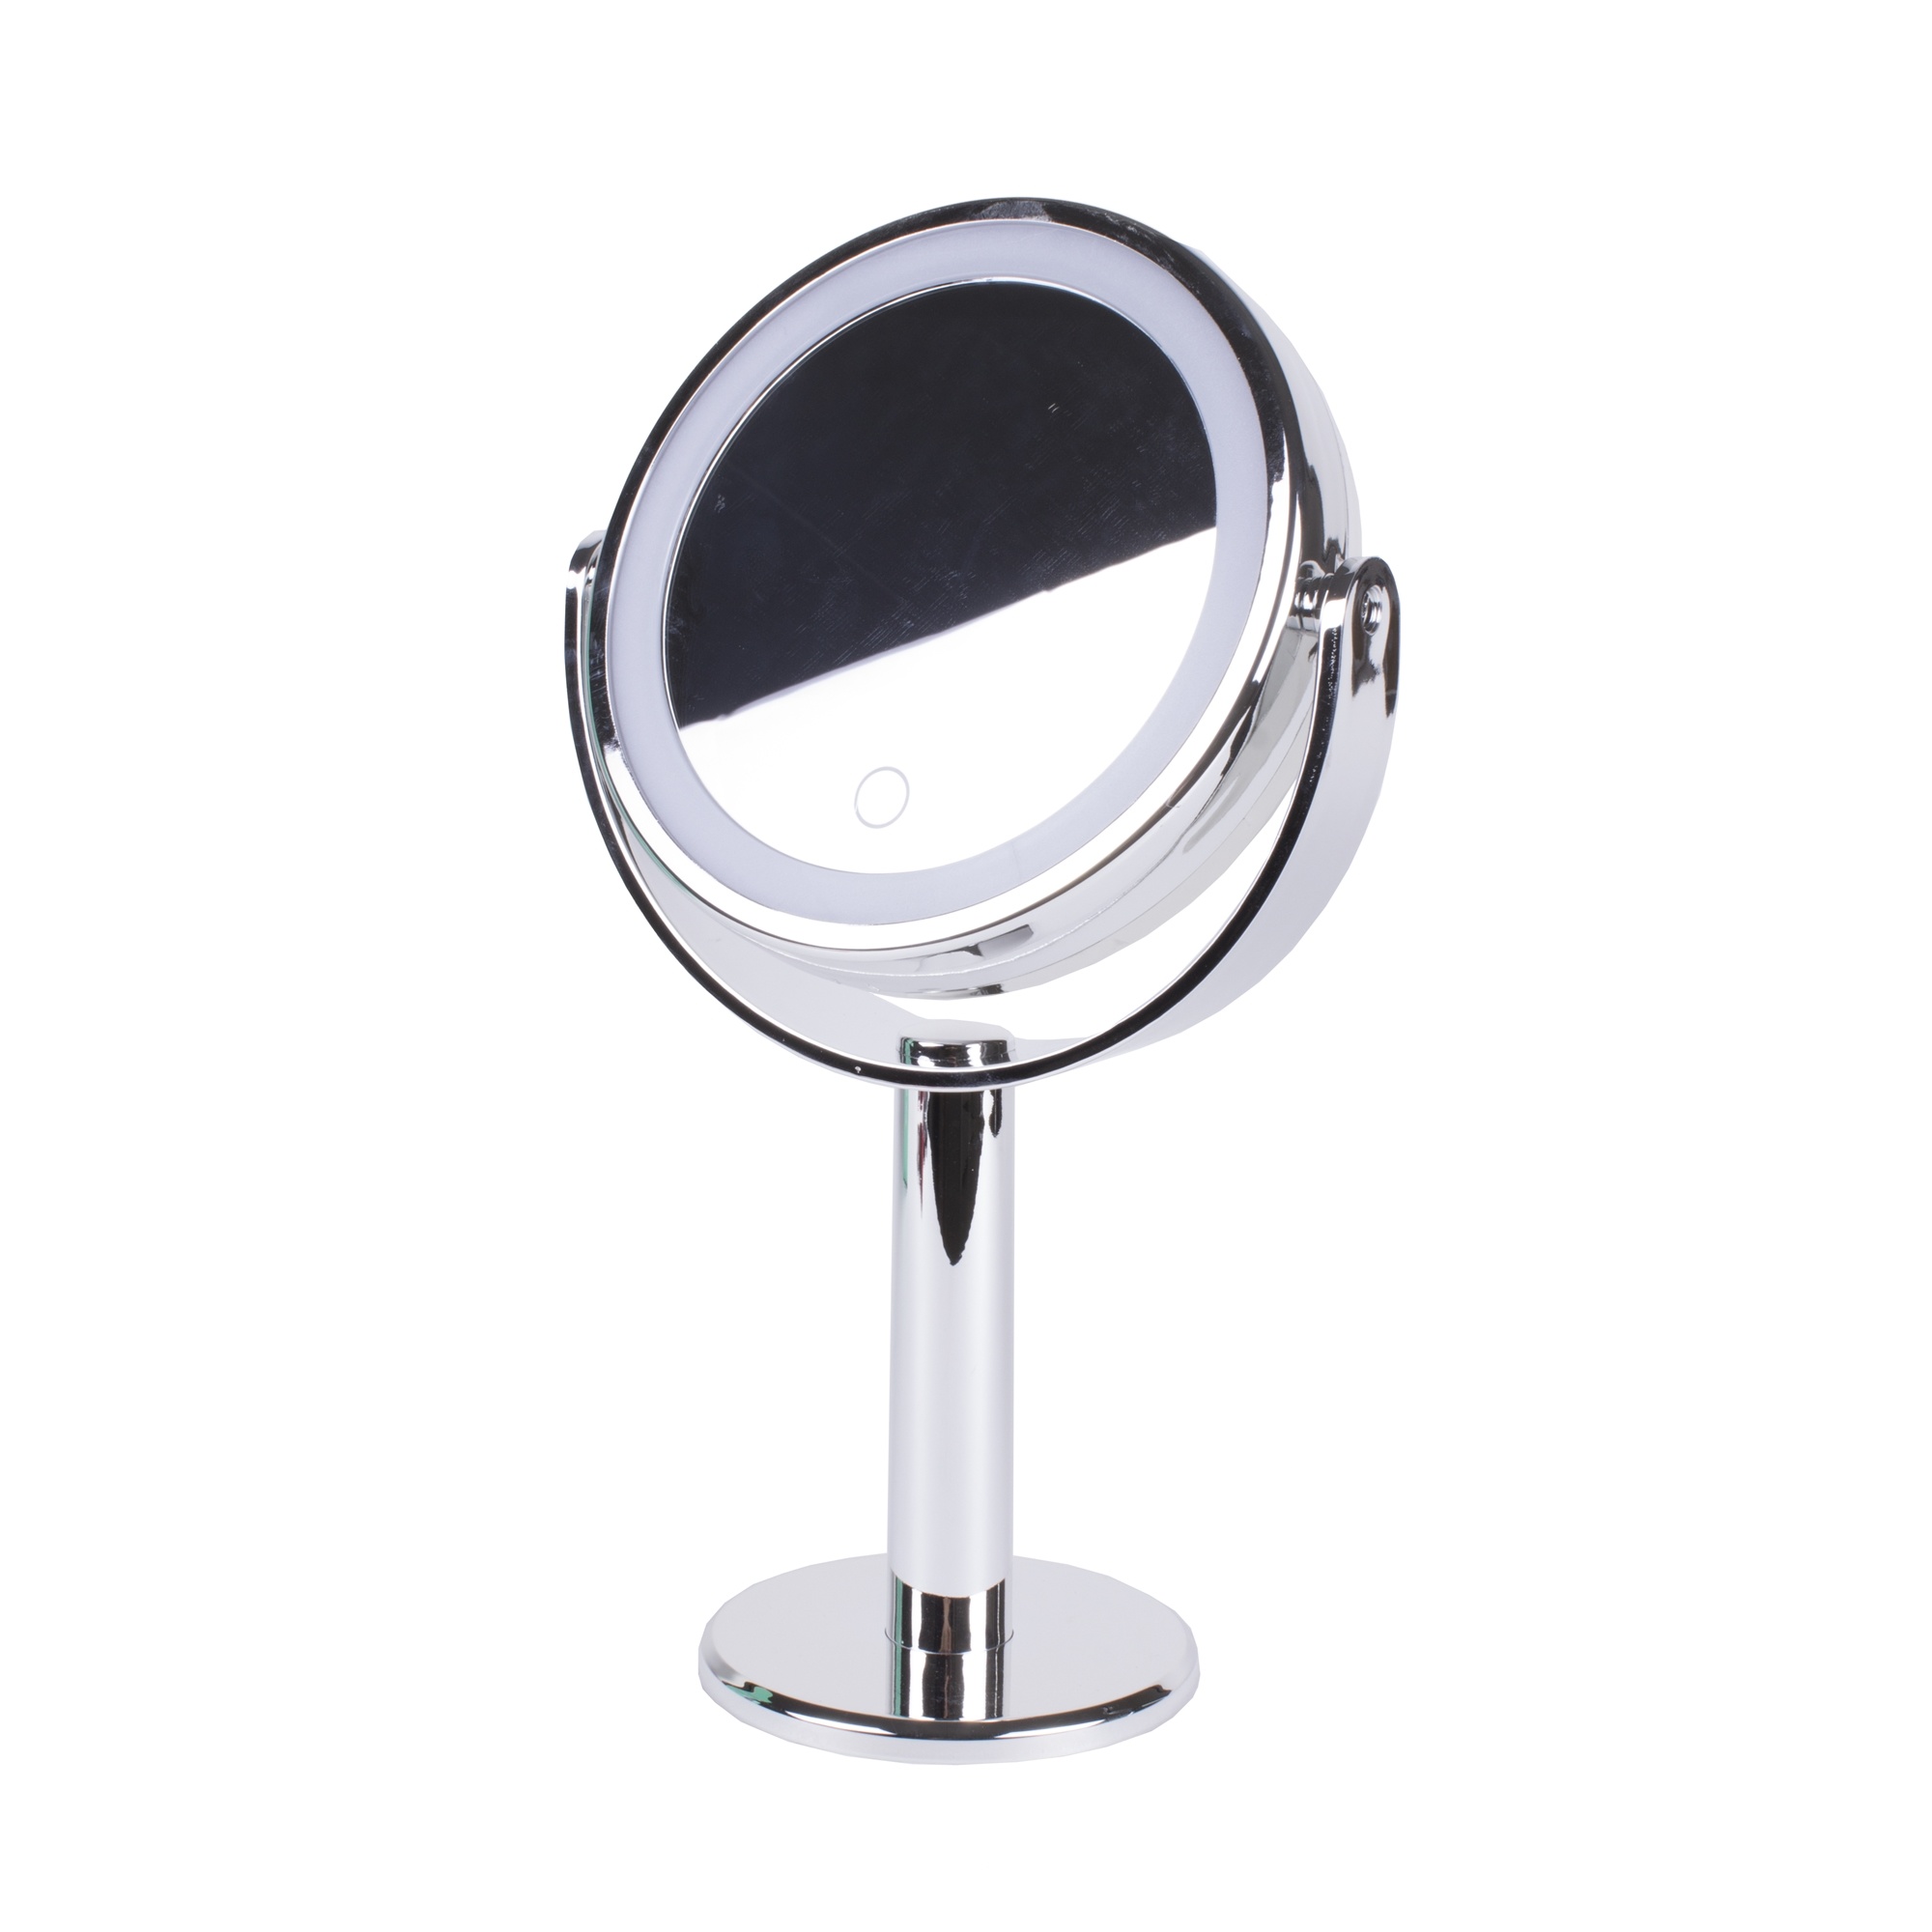 Plons scherp kern Benson Make-Up Spiegel - LED Touch - Dimbaar - 2-Zijdig - Chroom kopen? -  2Cheap